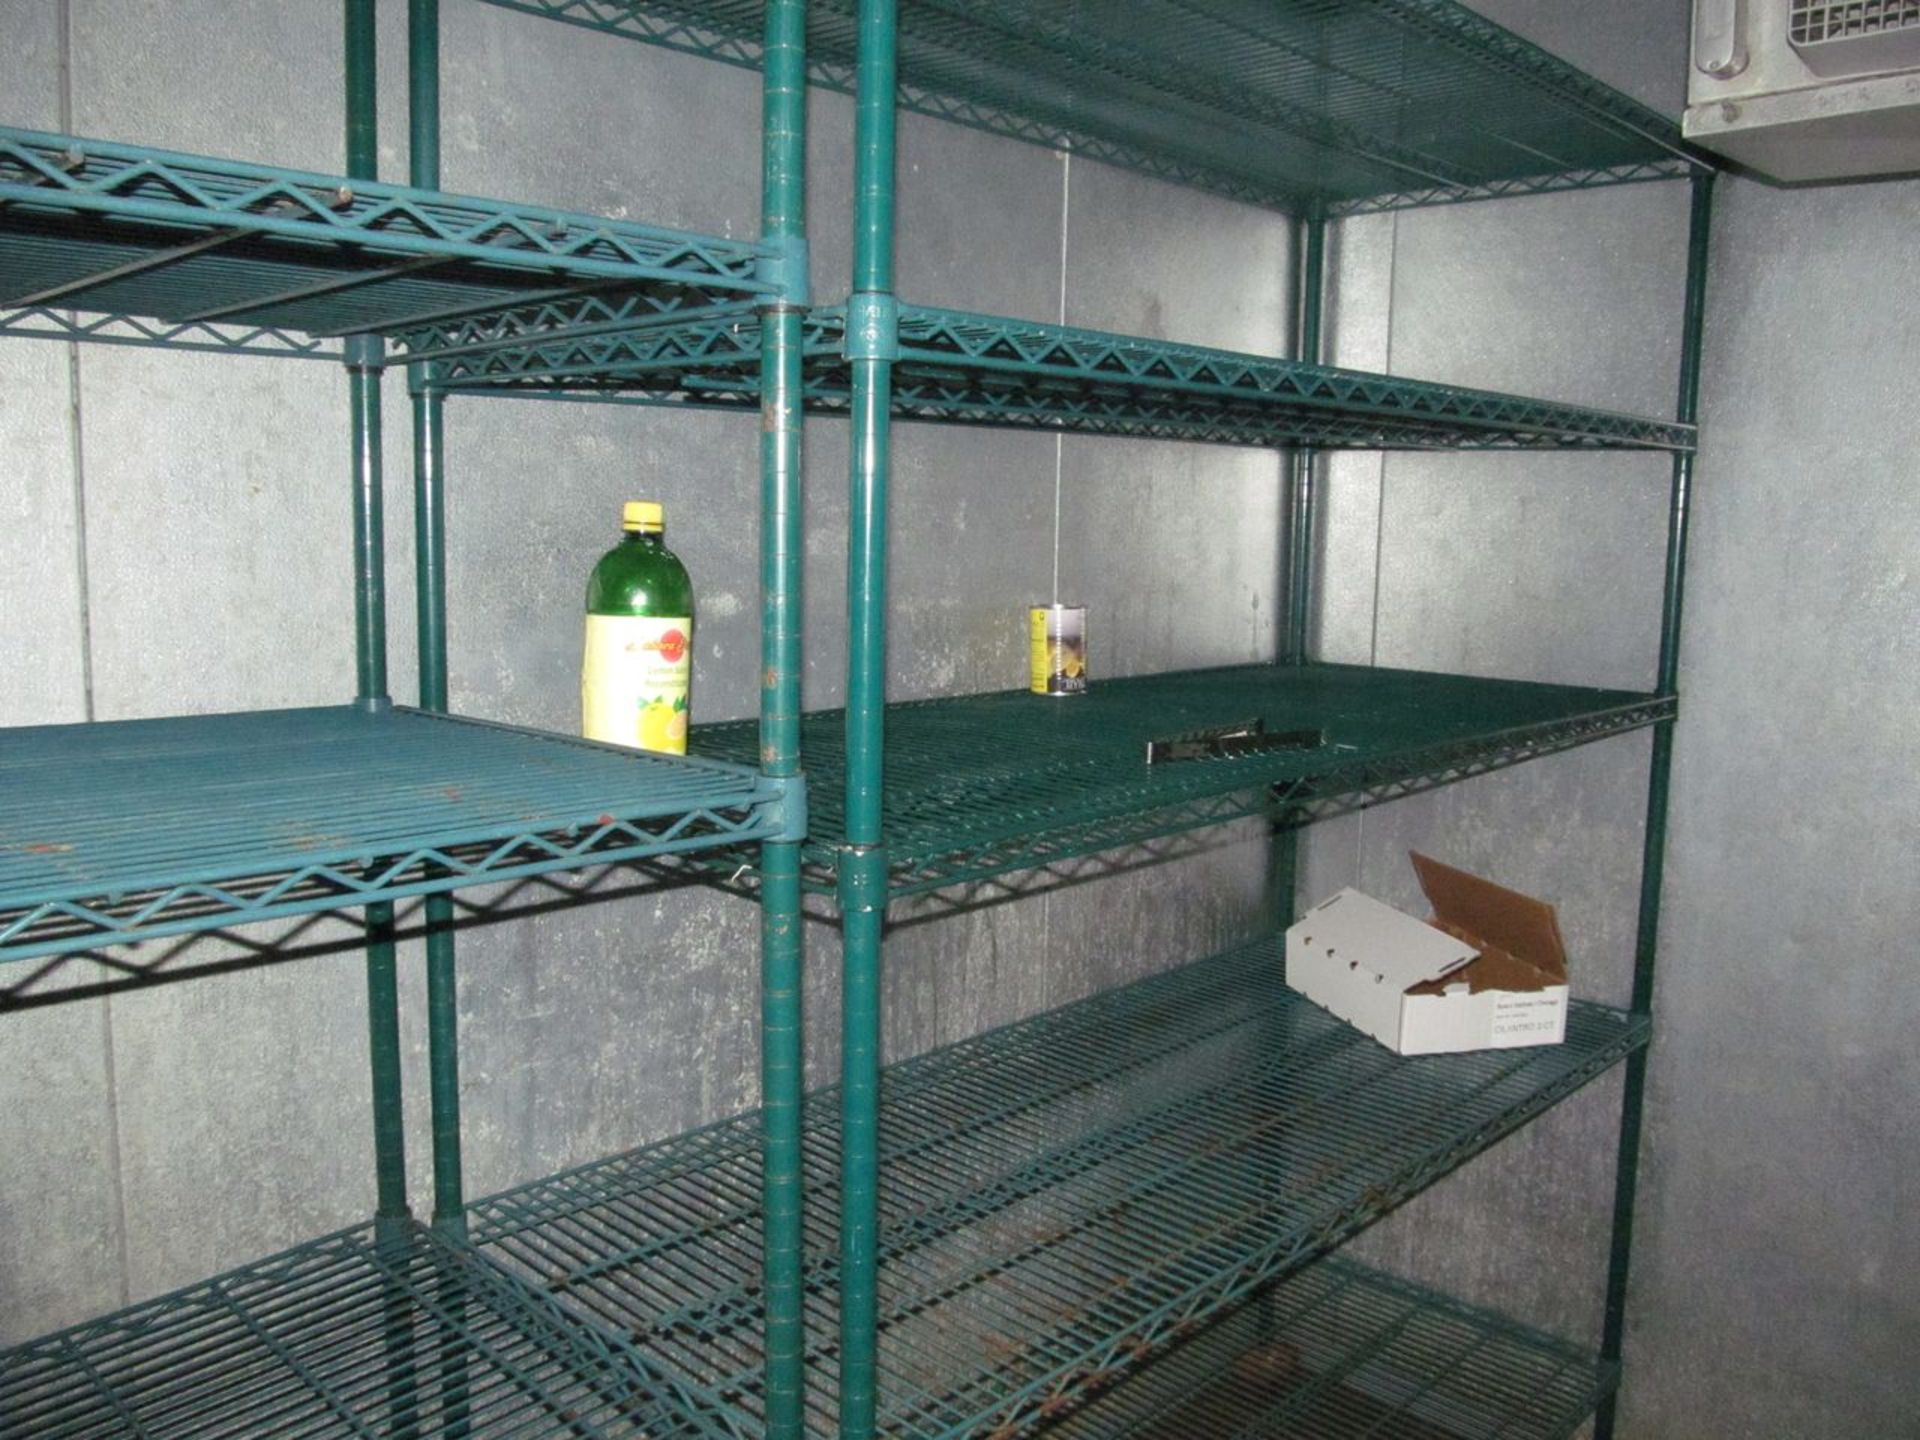 Lot - Racks Inside Freezer (Freezer Not Included) (Upstairs Storage) - Image 2 of 2